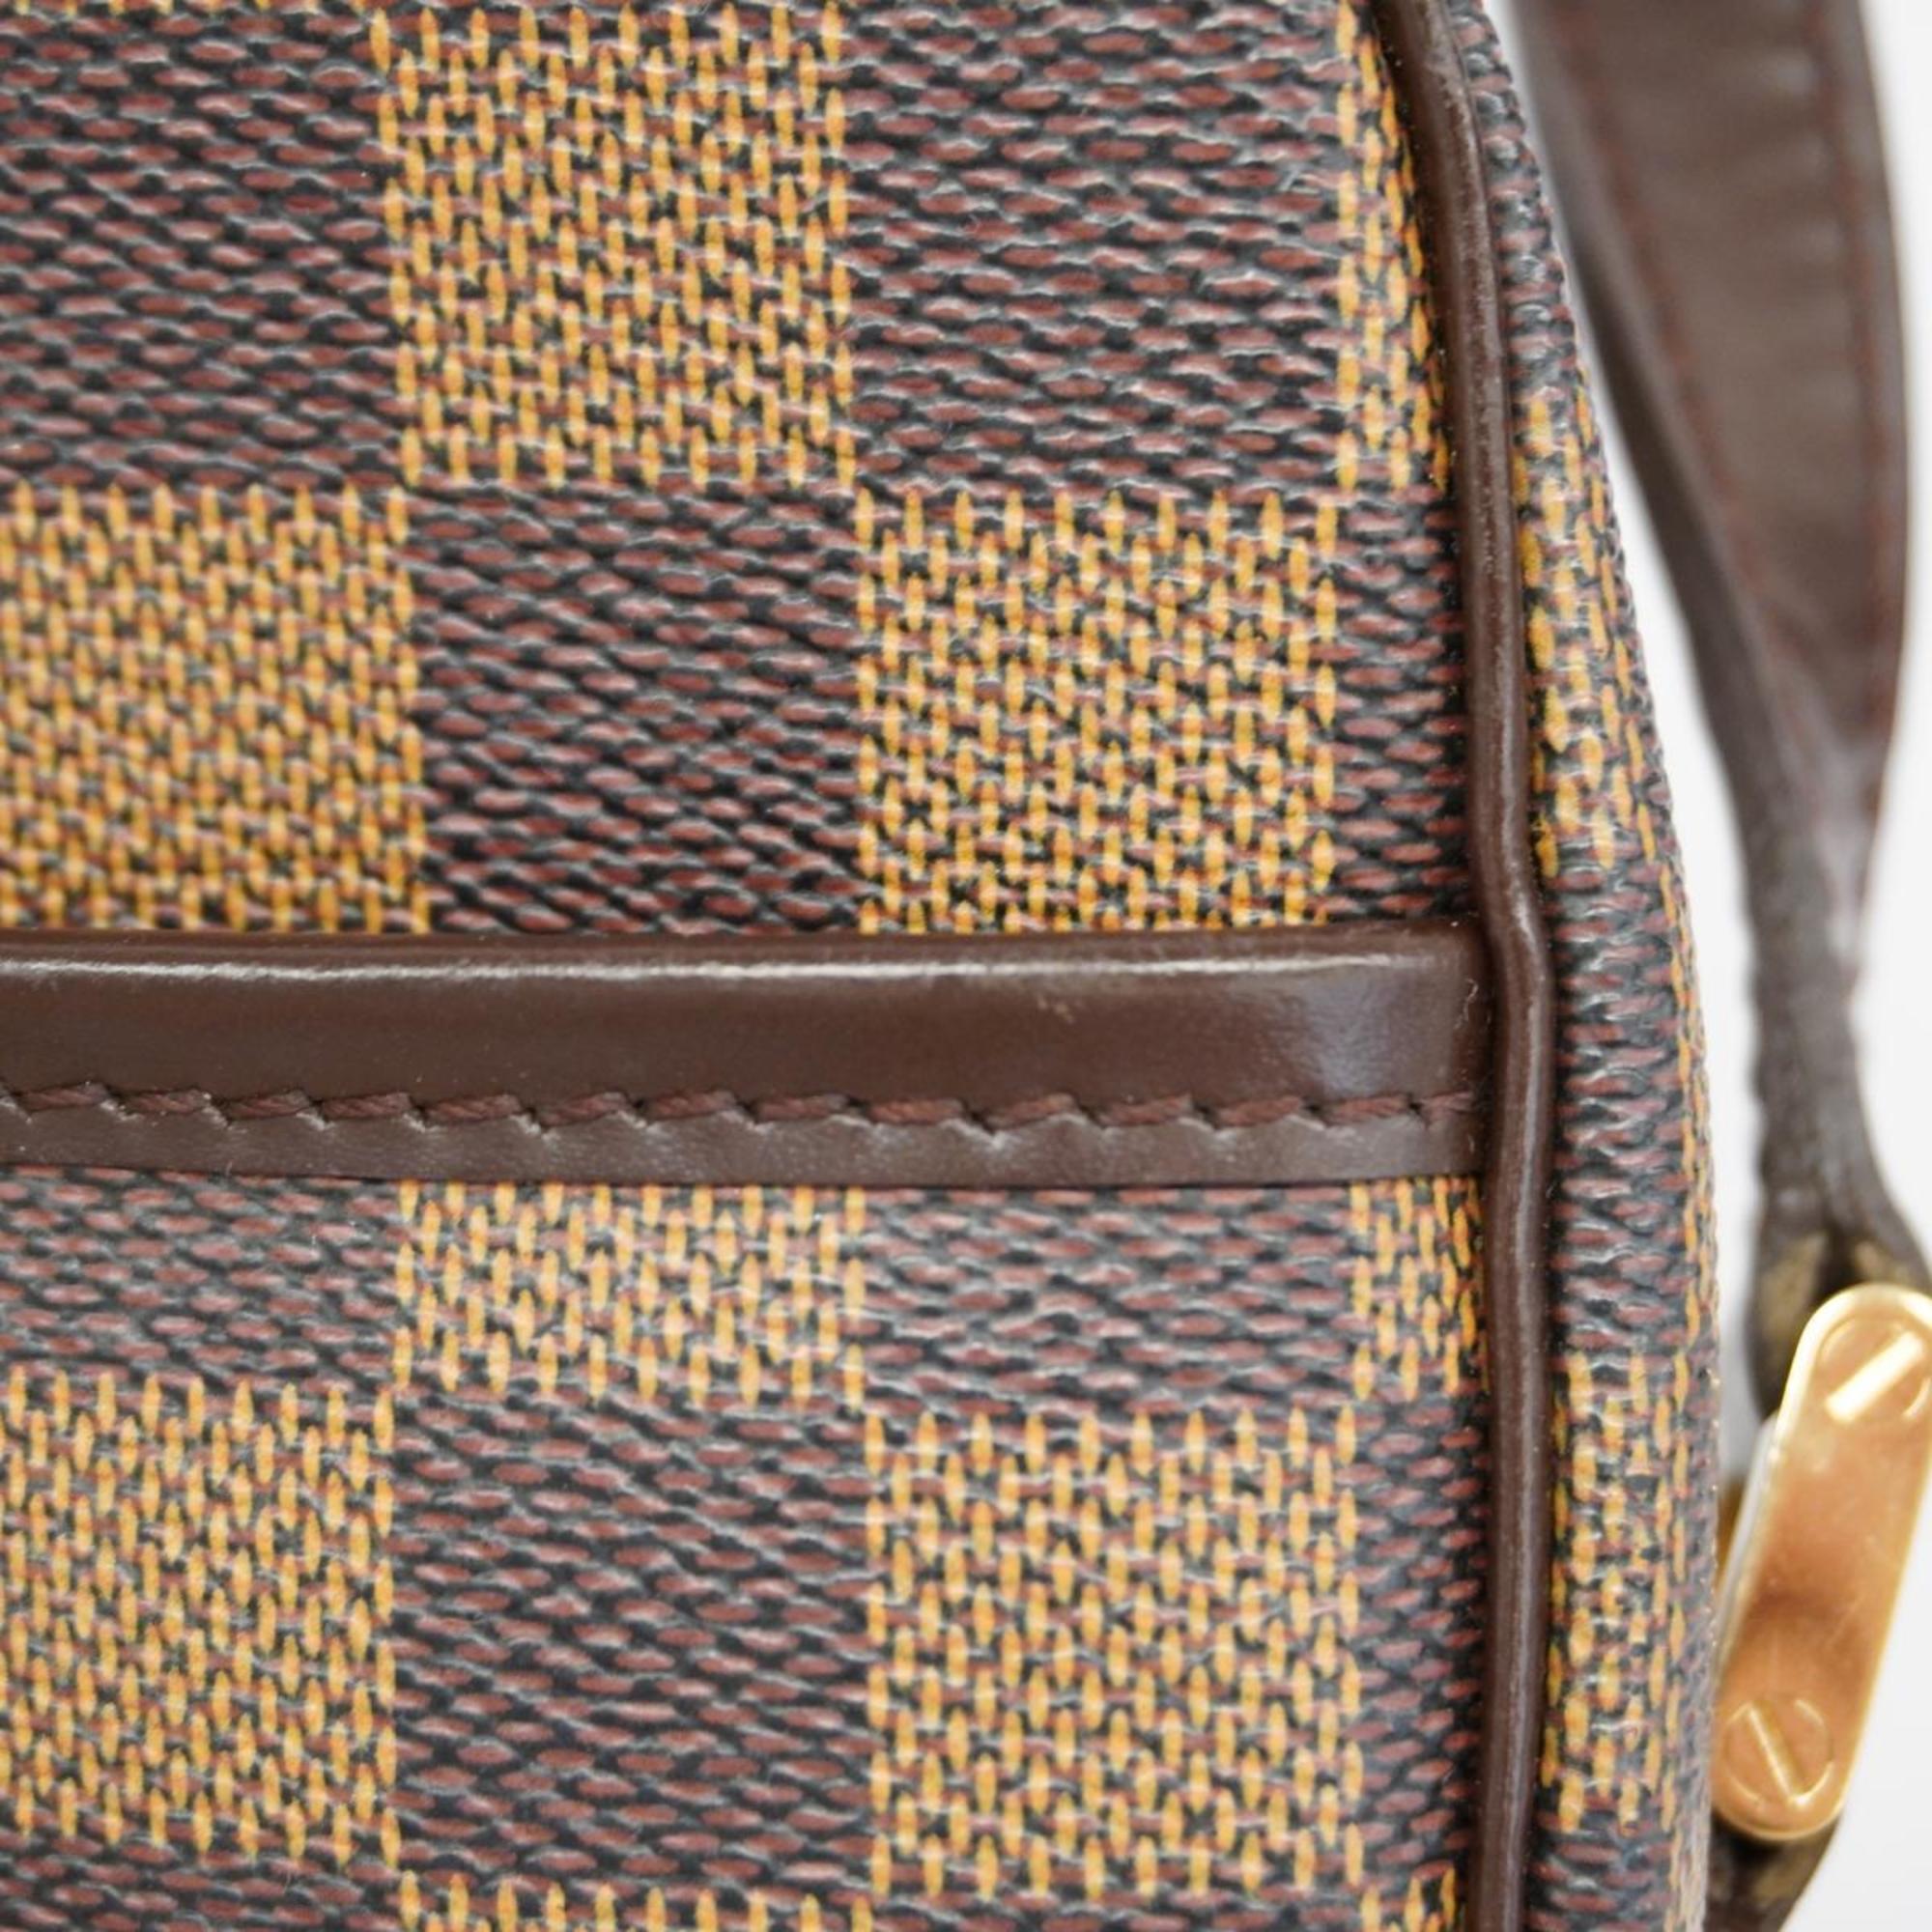 Louis Vuitton Shoulder Bag Damier Ipanema PM N51294 Ebene Ladies